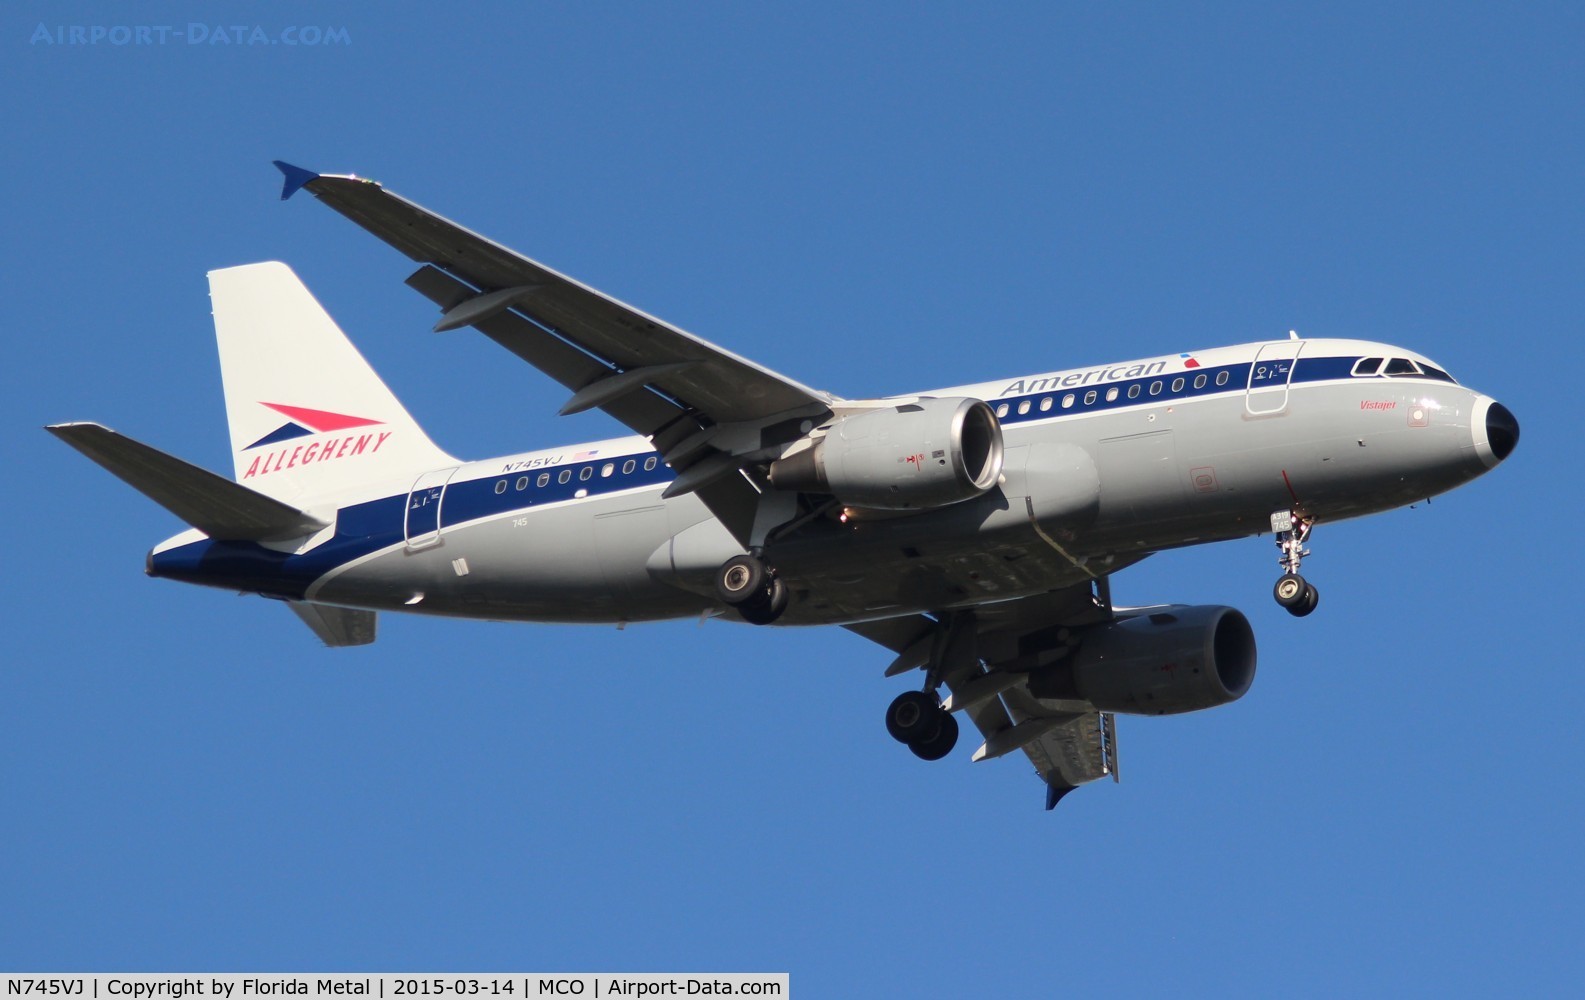 N745VJ, 2000 Airbus A319-112 C/N 1289, American Airlines Allegheny A319 tribute